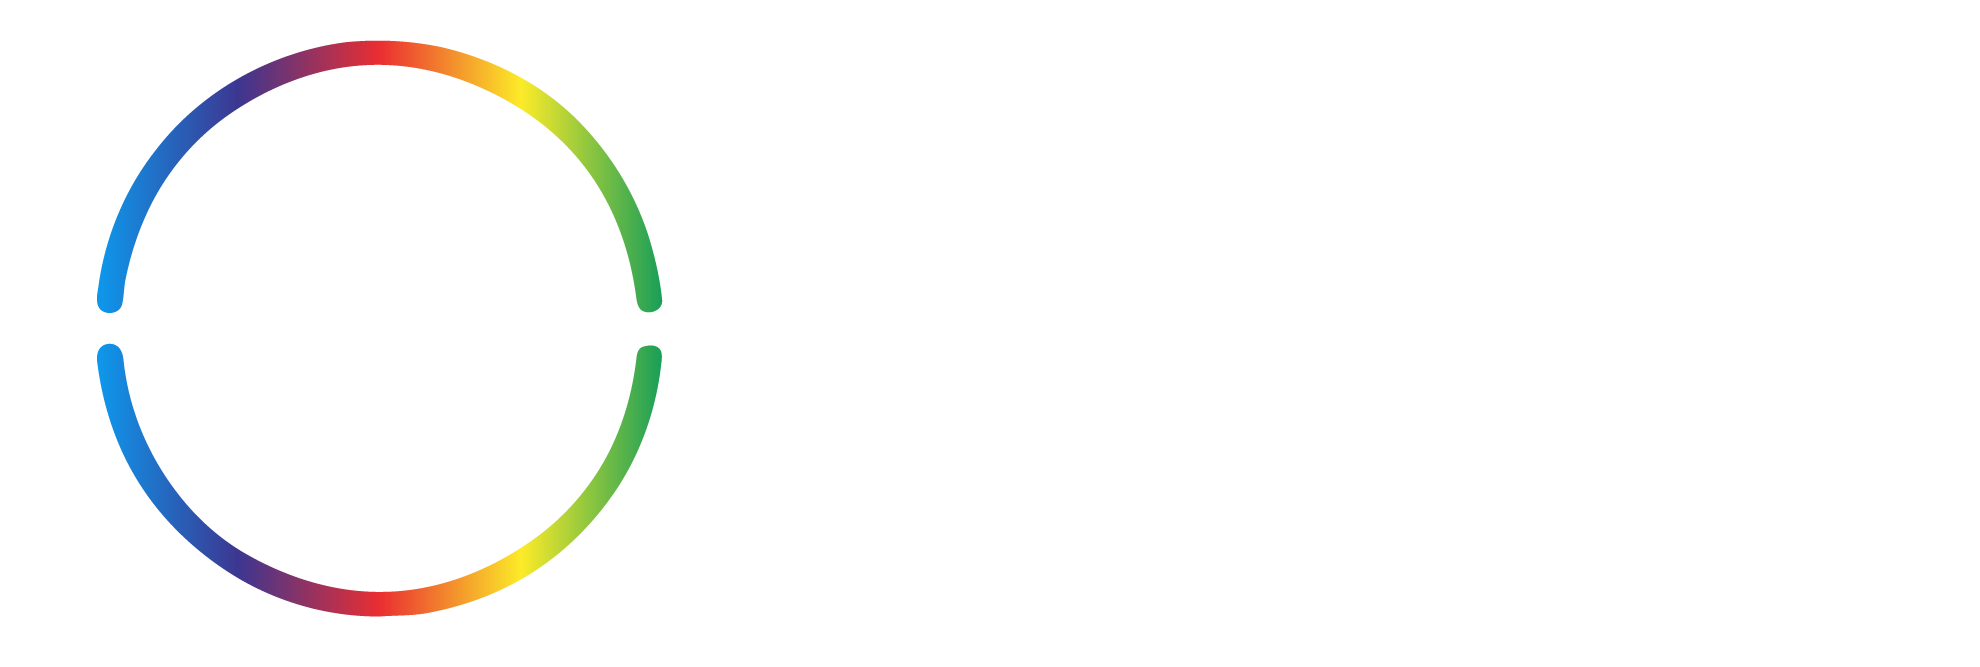 Logo MLTV_Original Horizontal Letras Blancas